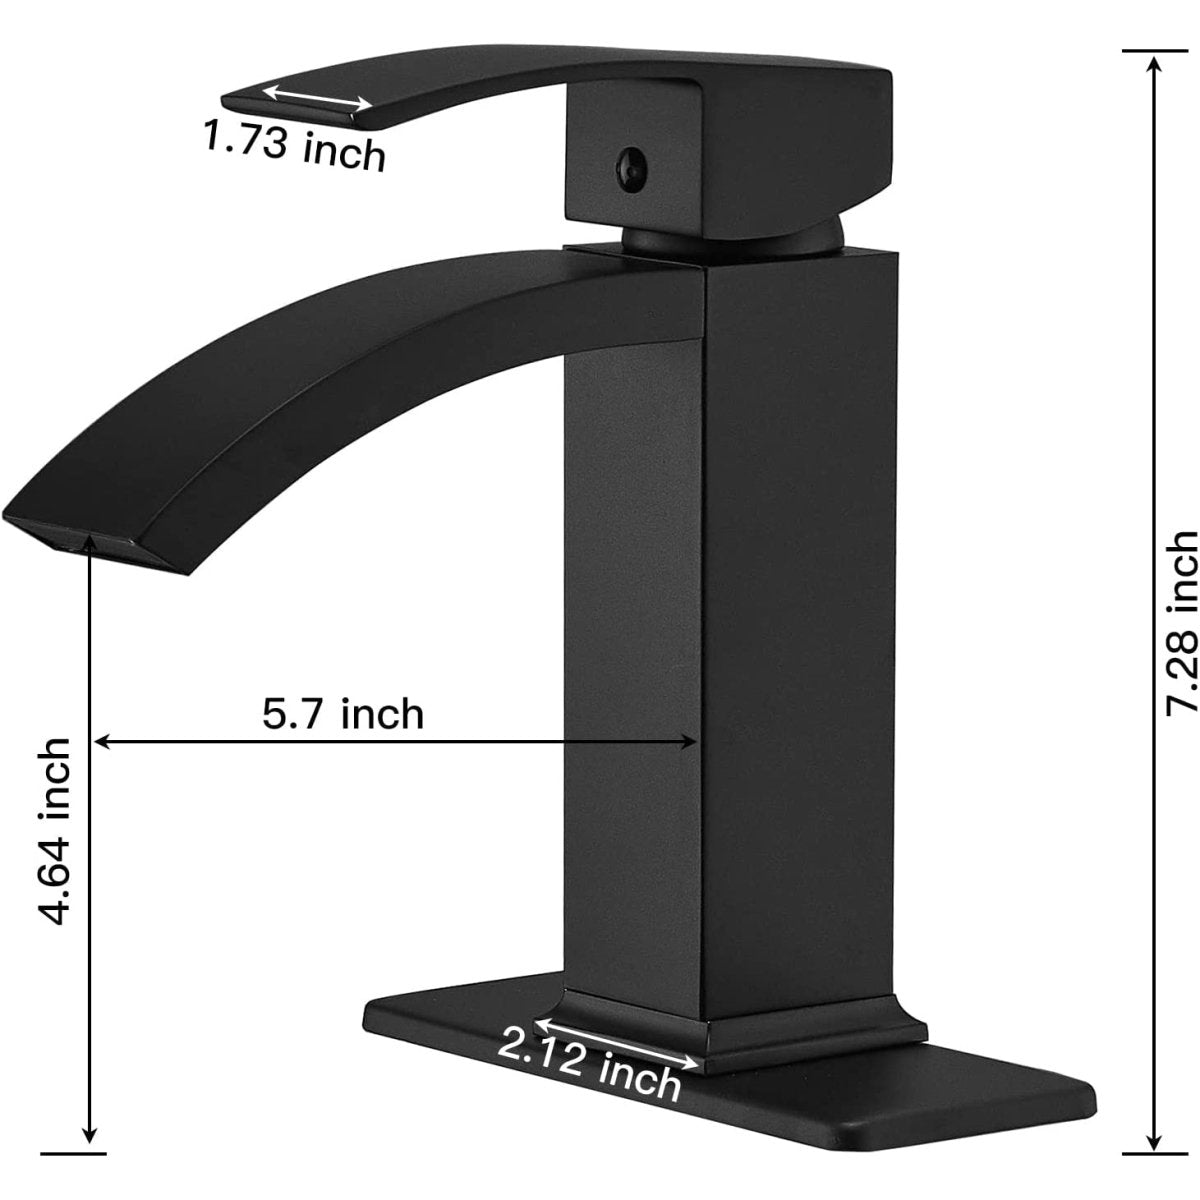 Waterfall Single Hole Single-Handle Bathroom Faucet Black - buyfaucet.com